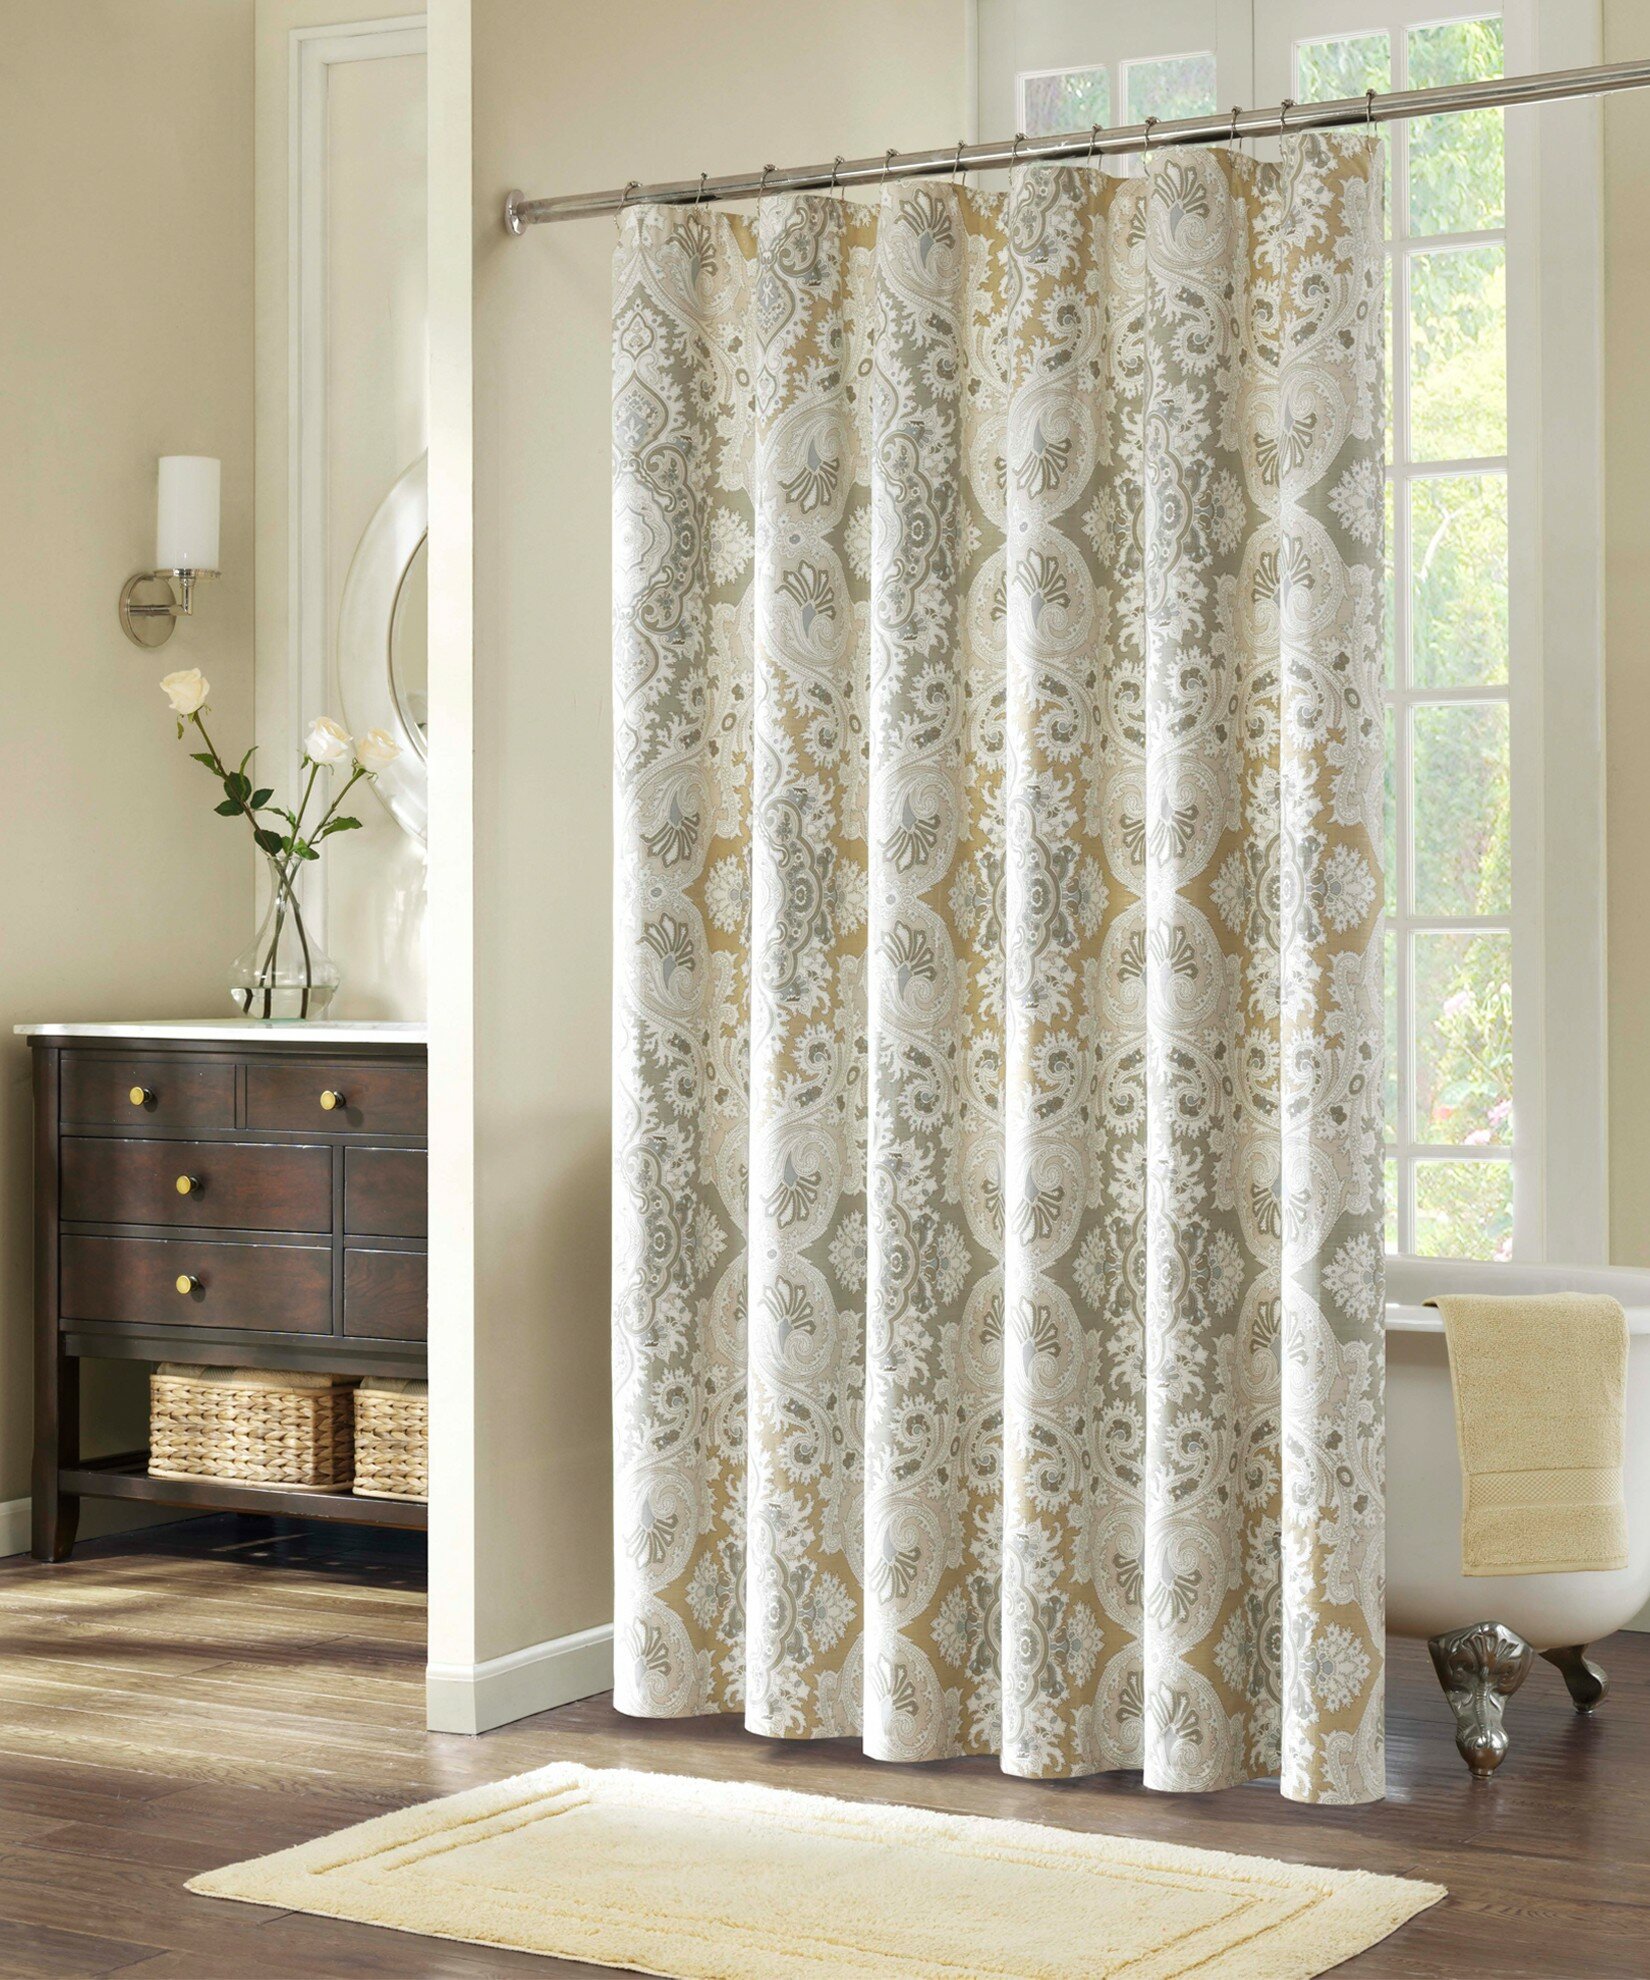 Ikea Shower Curtain for Best Your Bathroom Decoration: 96 Long Shower Curtain | Ikea Shower Curtain | Narrow Shower Curtain